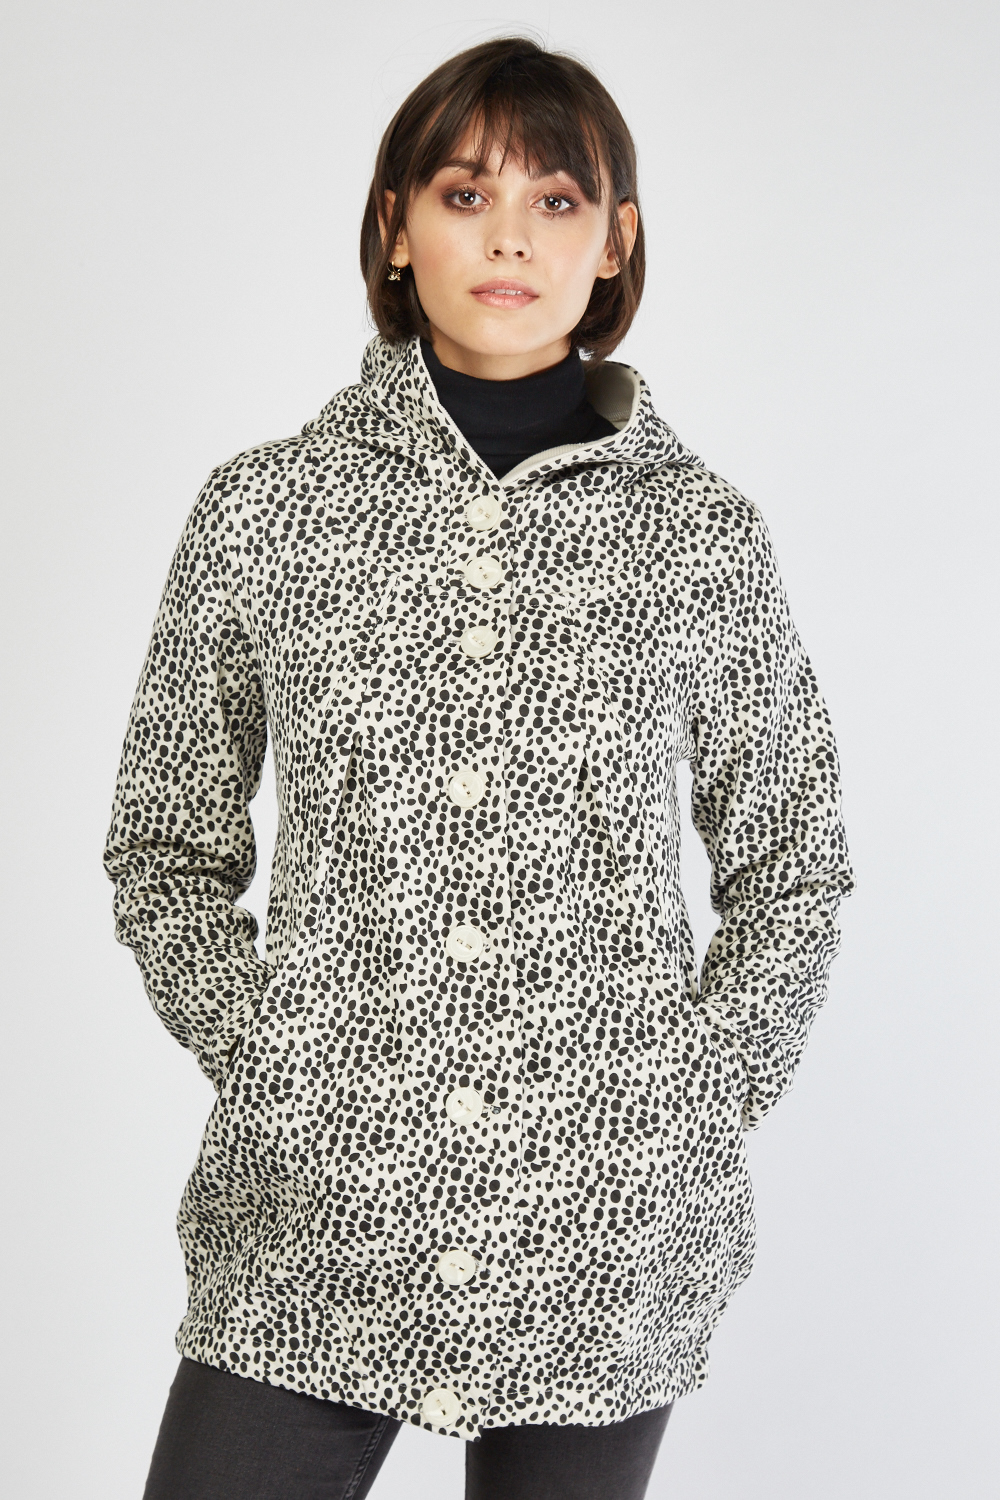 Speckled Printed Hooded Jacket - Just $3